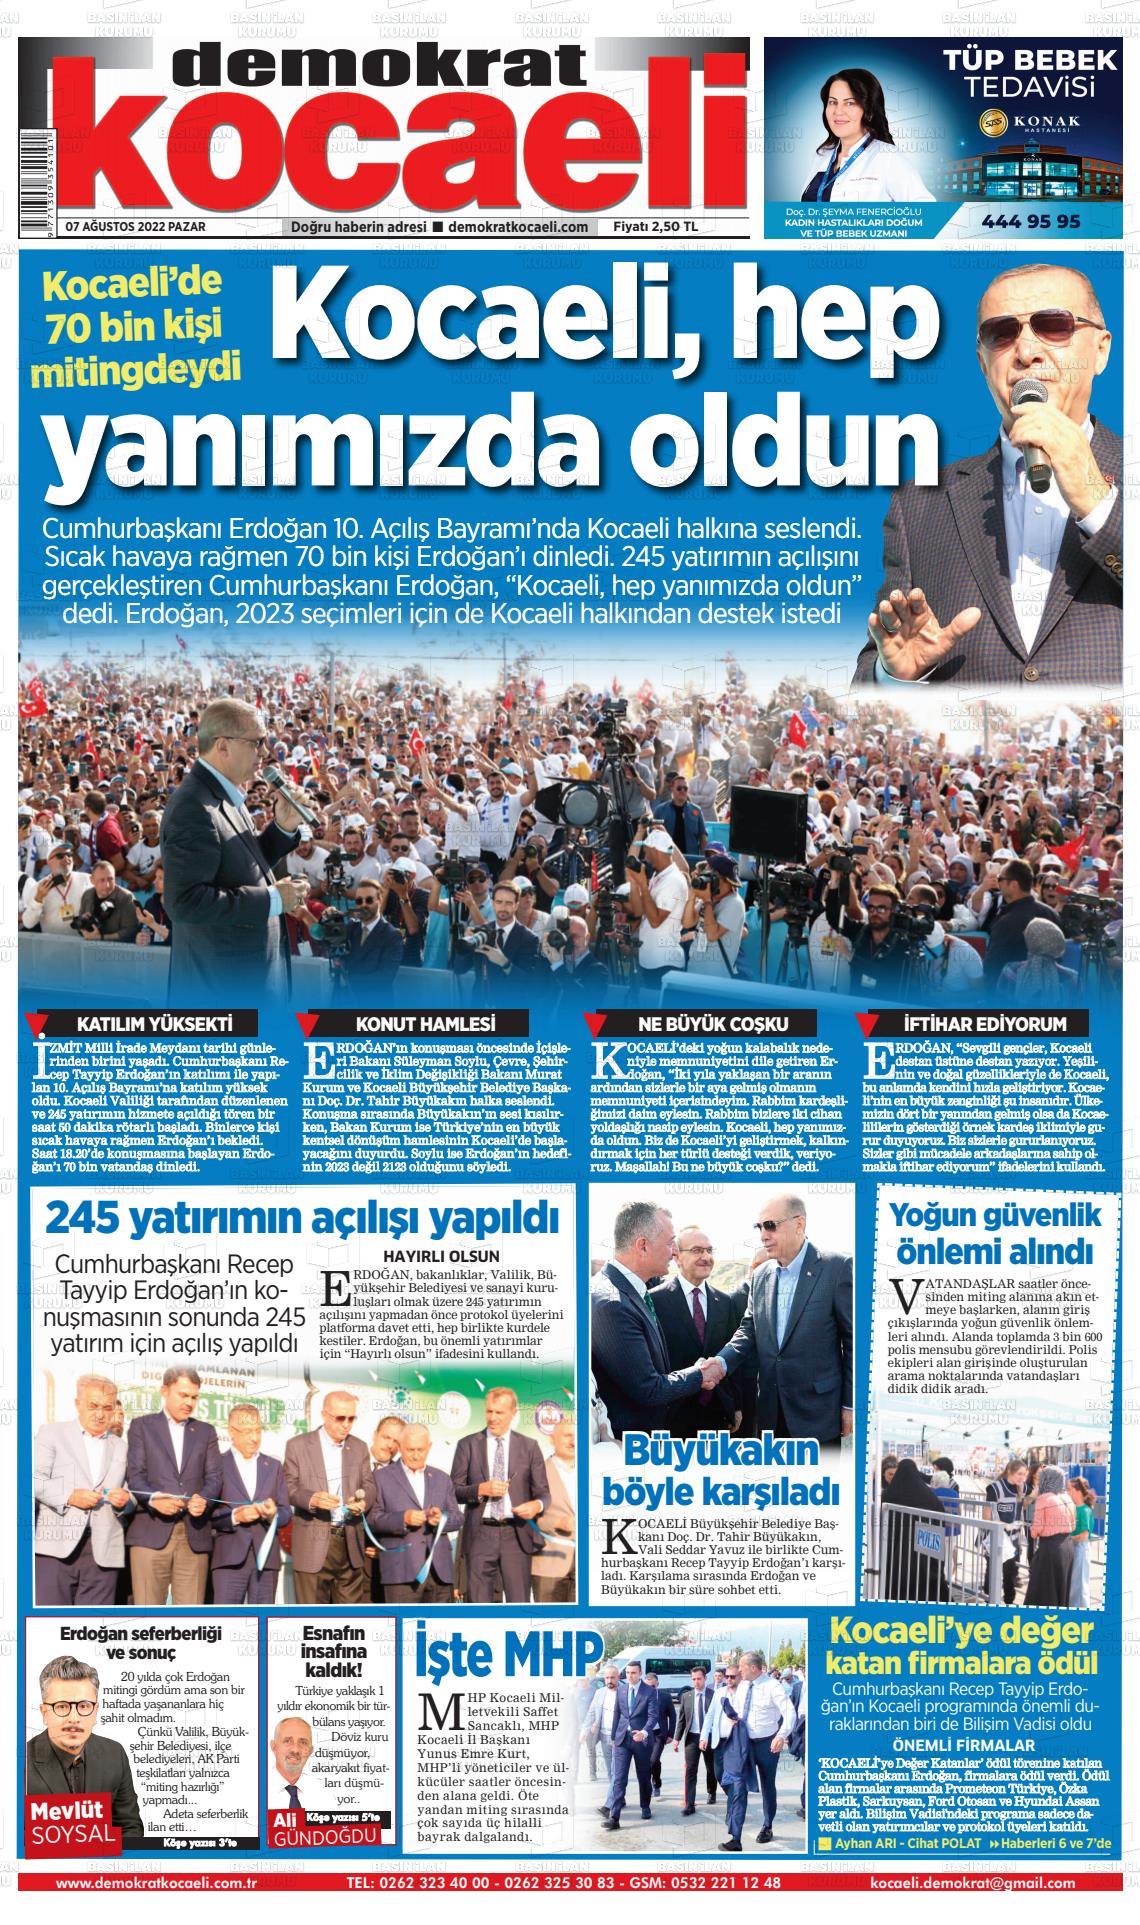 07 Ağustos 2022 Demokrat Kocaeli Gazete Manşeti